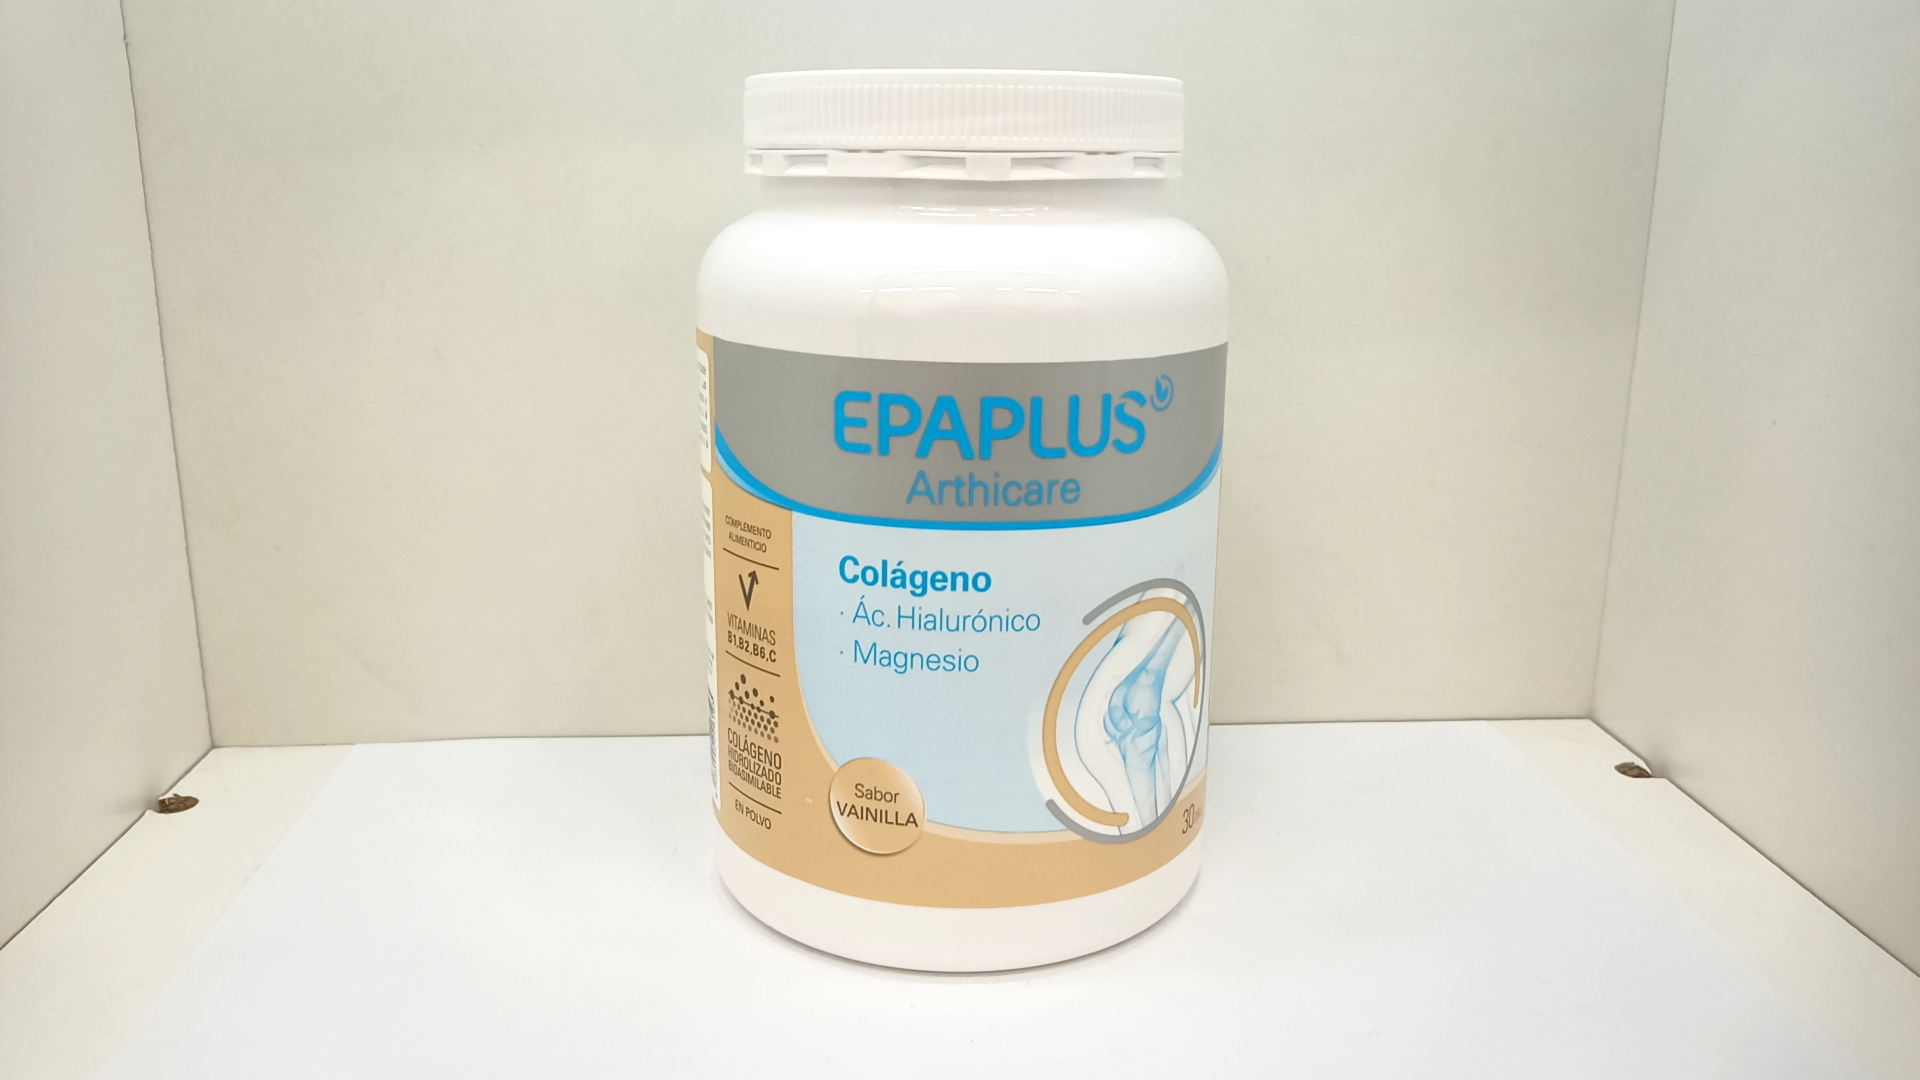 EPAPLUS Arthicare. Colágeno Ác. Hialurónico y Magnesio. 325g